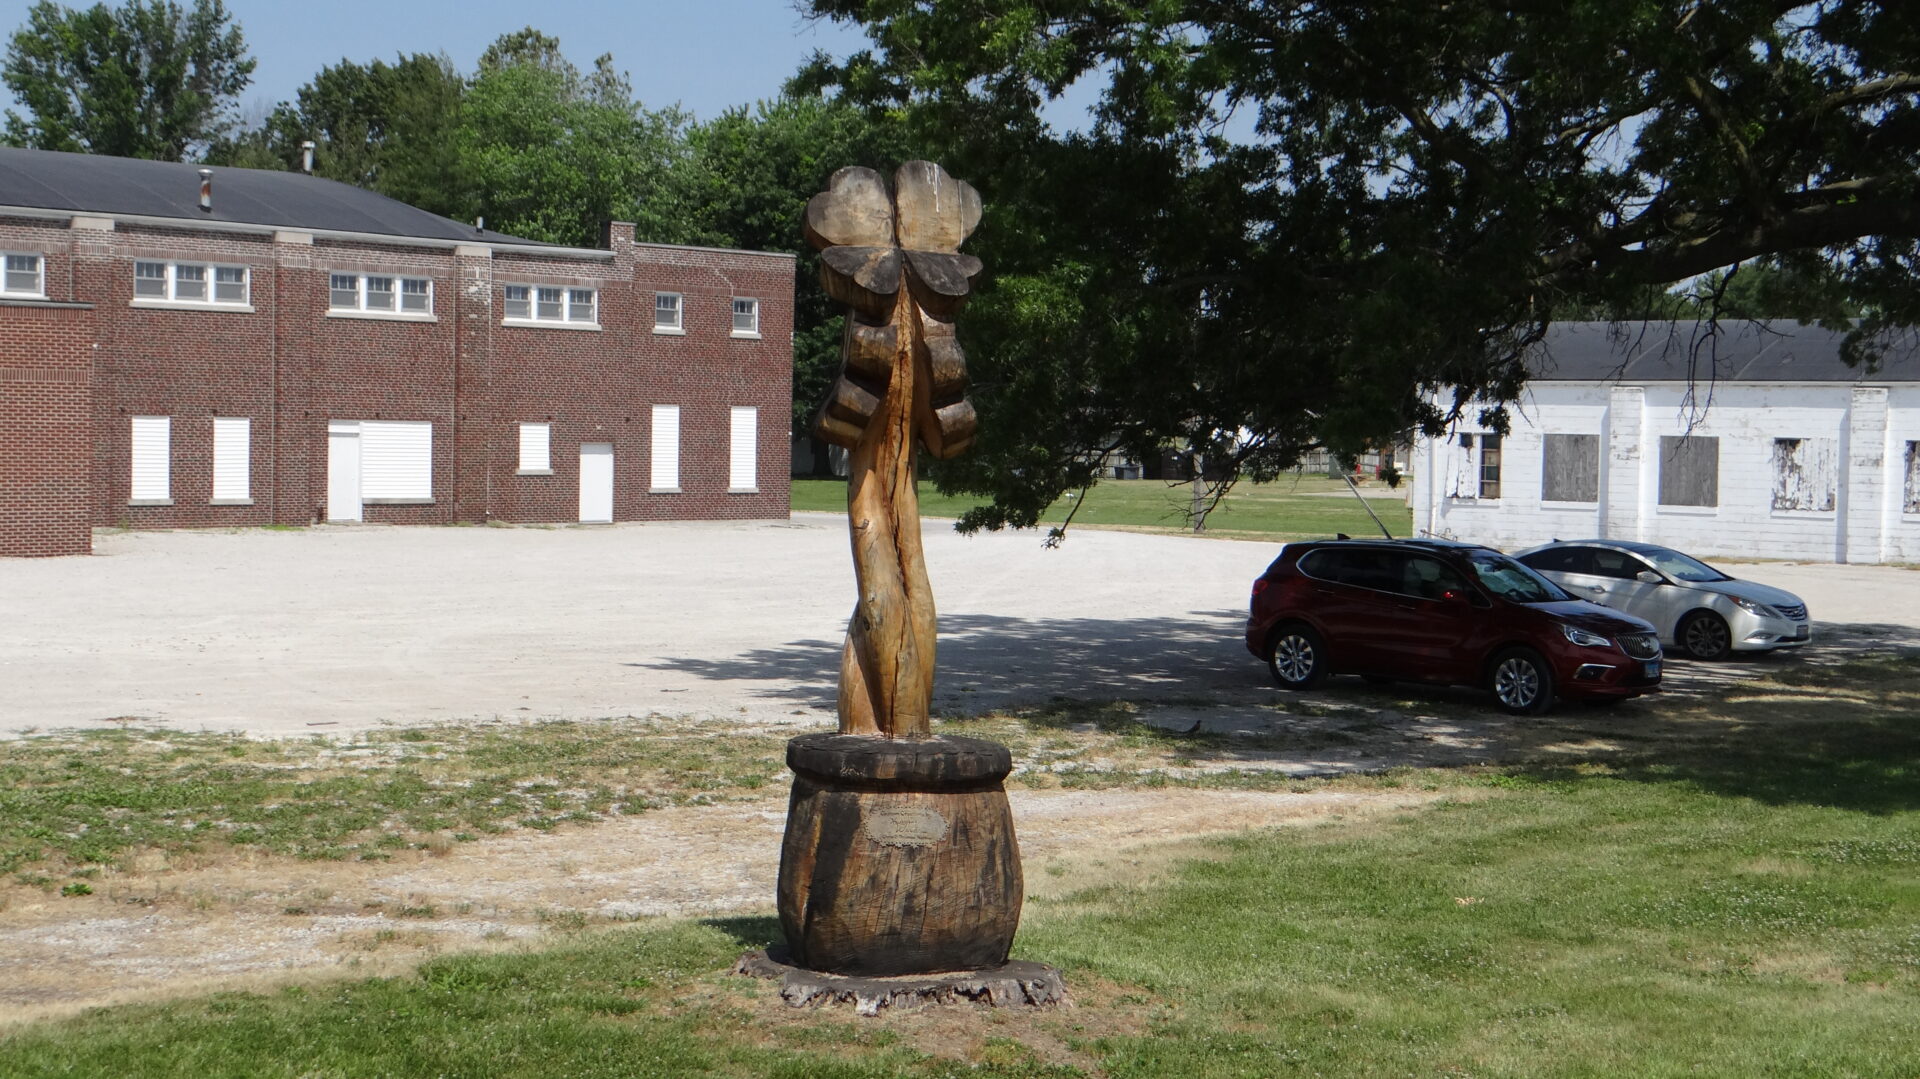 Statue & Community Building